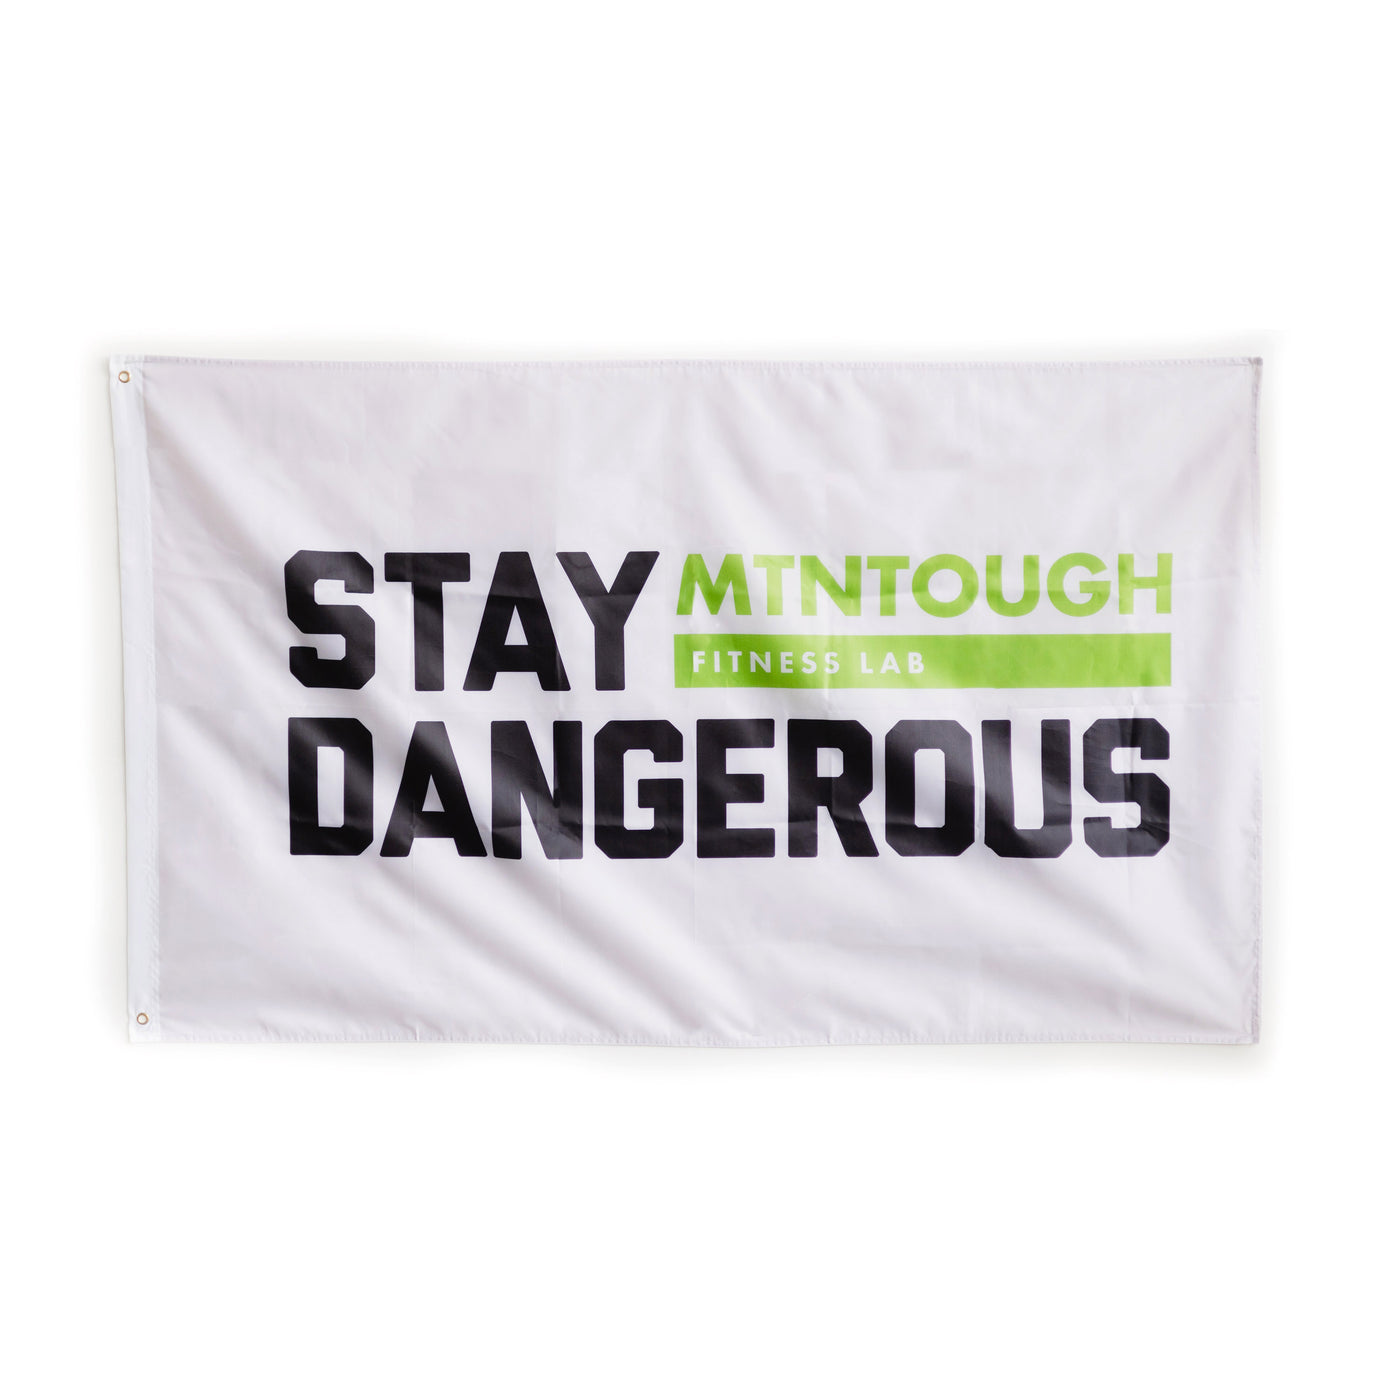 MTNTOUGH "Stay Dangerous" Gym Flag